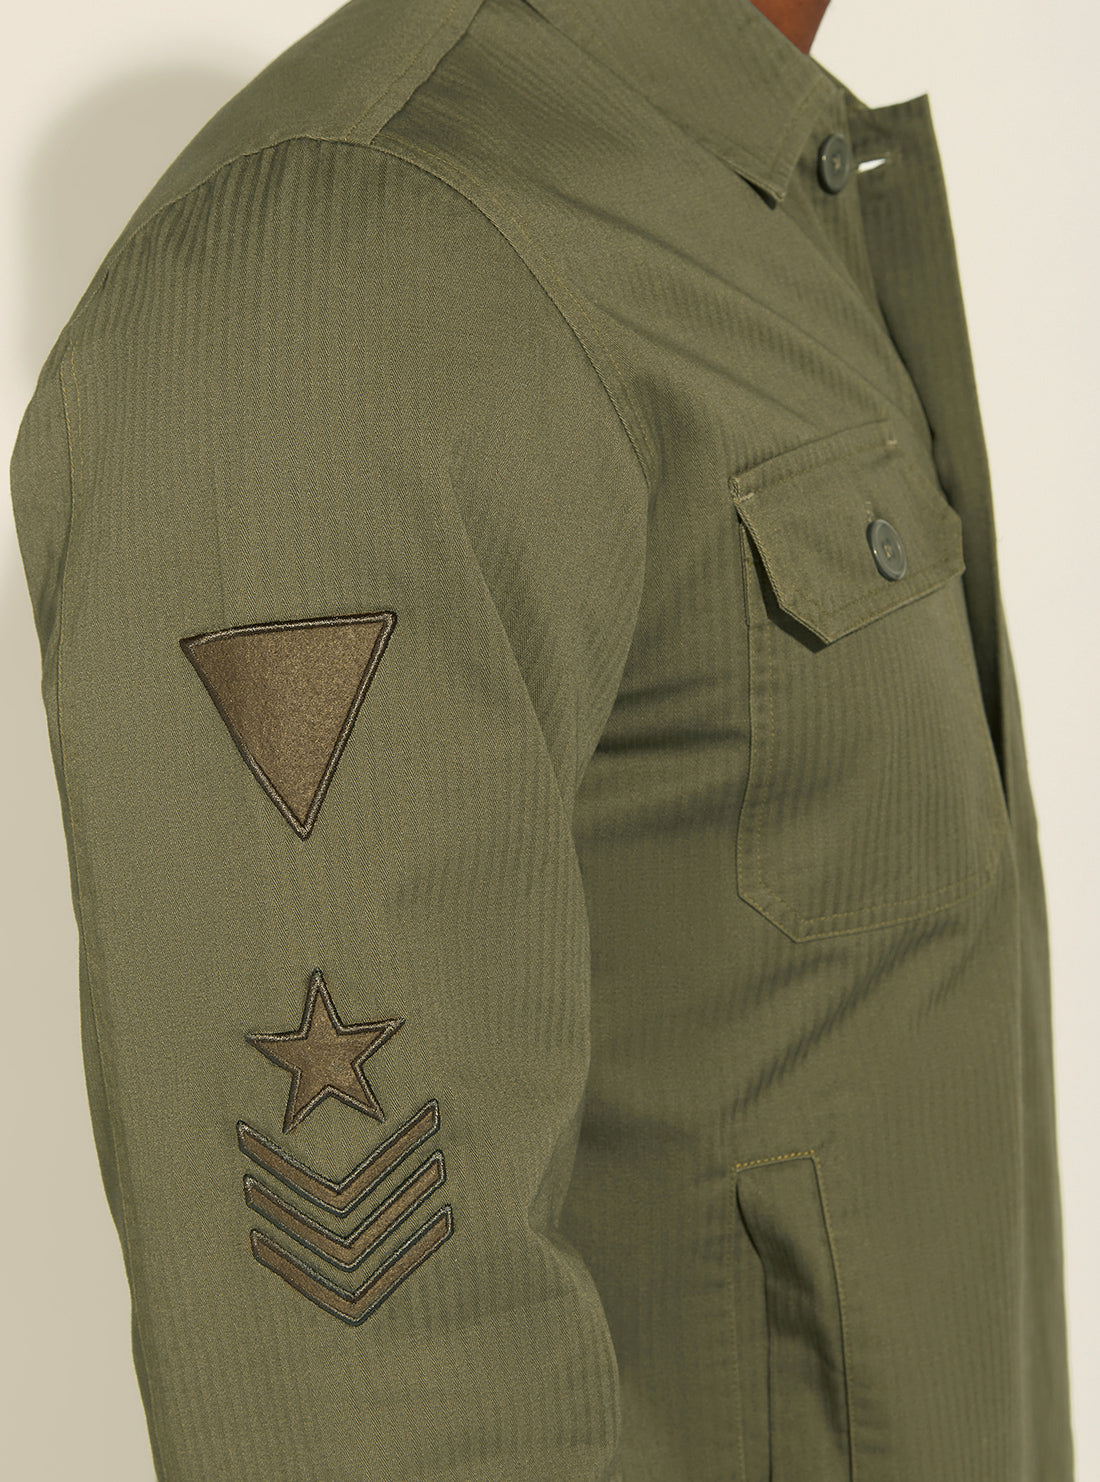 Green Canteen Vintage Army Shirt Jacket